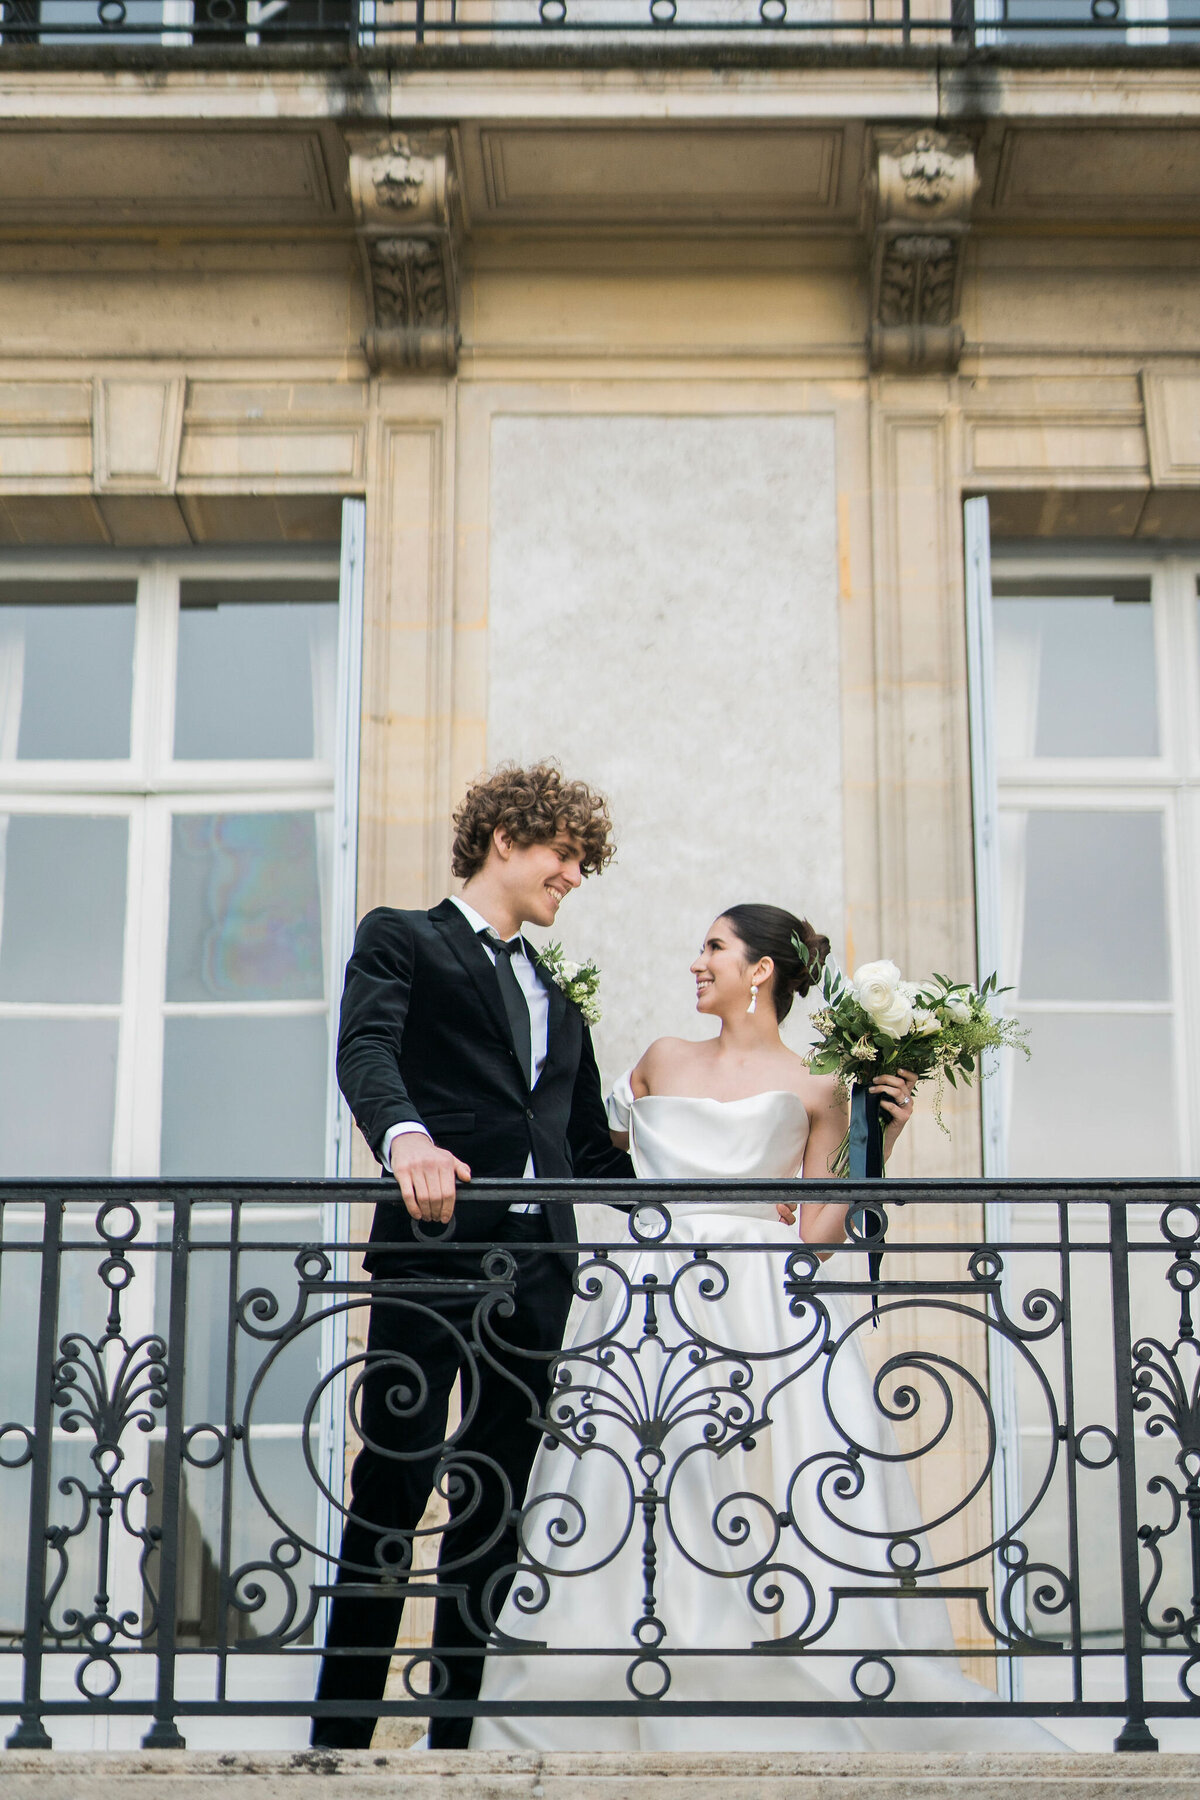 129-Chateau-de-Santeny-Paris-France-Inspiration-Love-Story Elopement-Cinematic-Romance-Destination-Wedding-Editorial-Luxury-Fine-Art-Lisa-Vigliotta-Photography